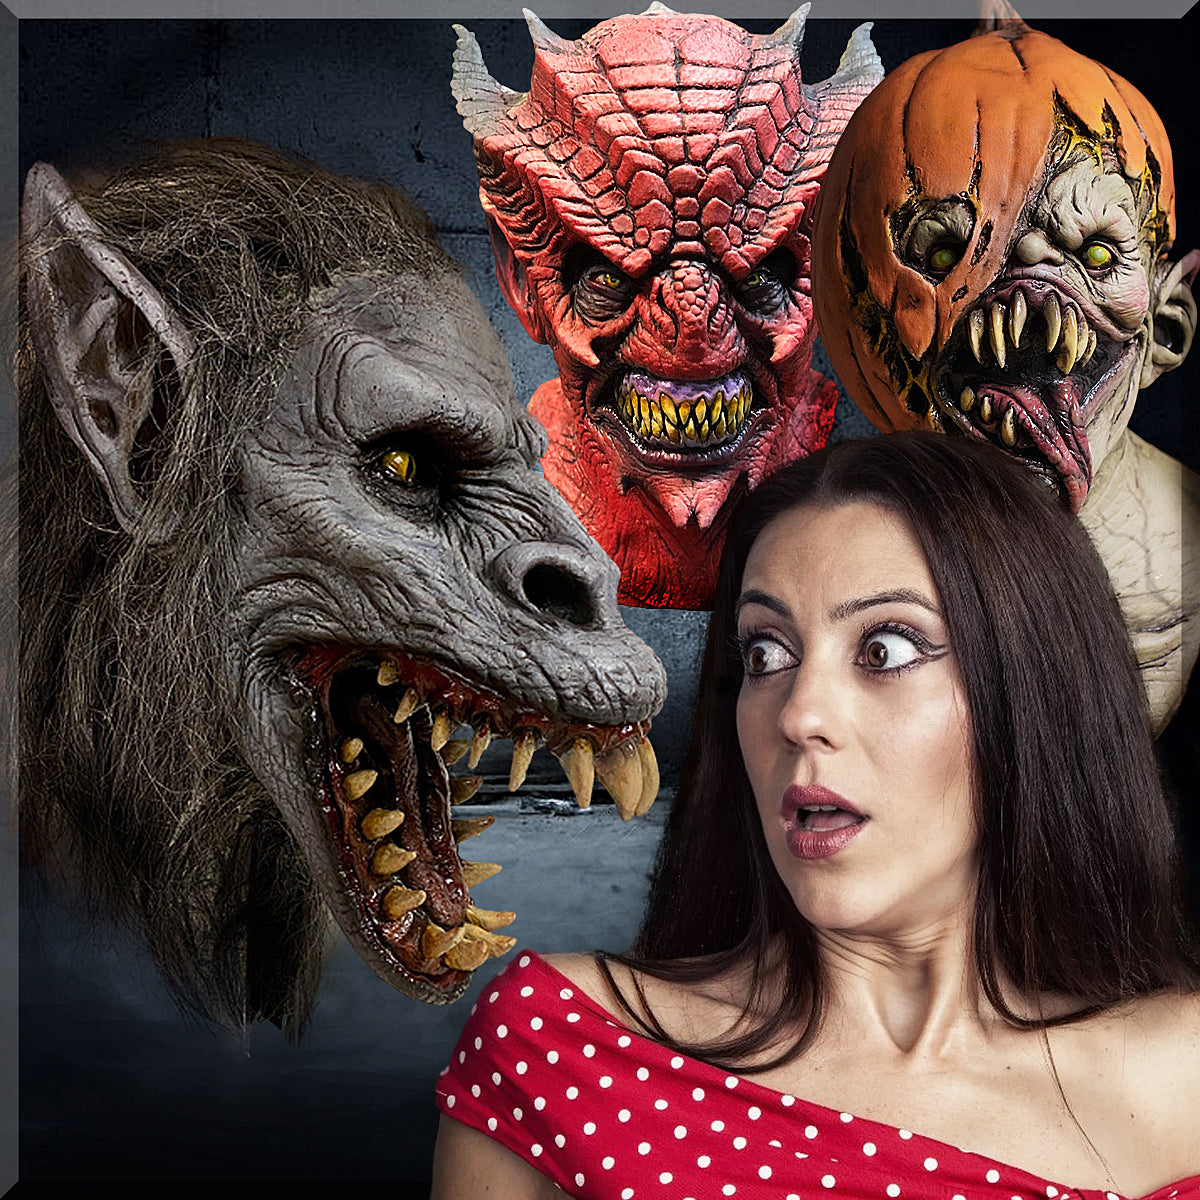 Halloween Asylum - 100% Scary Halloween Props and Halloween Masks